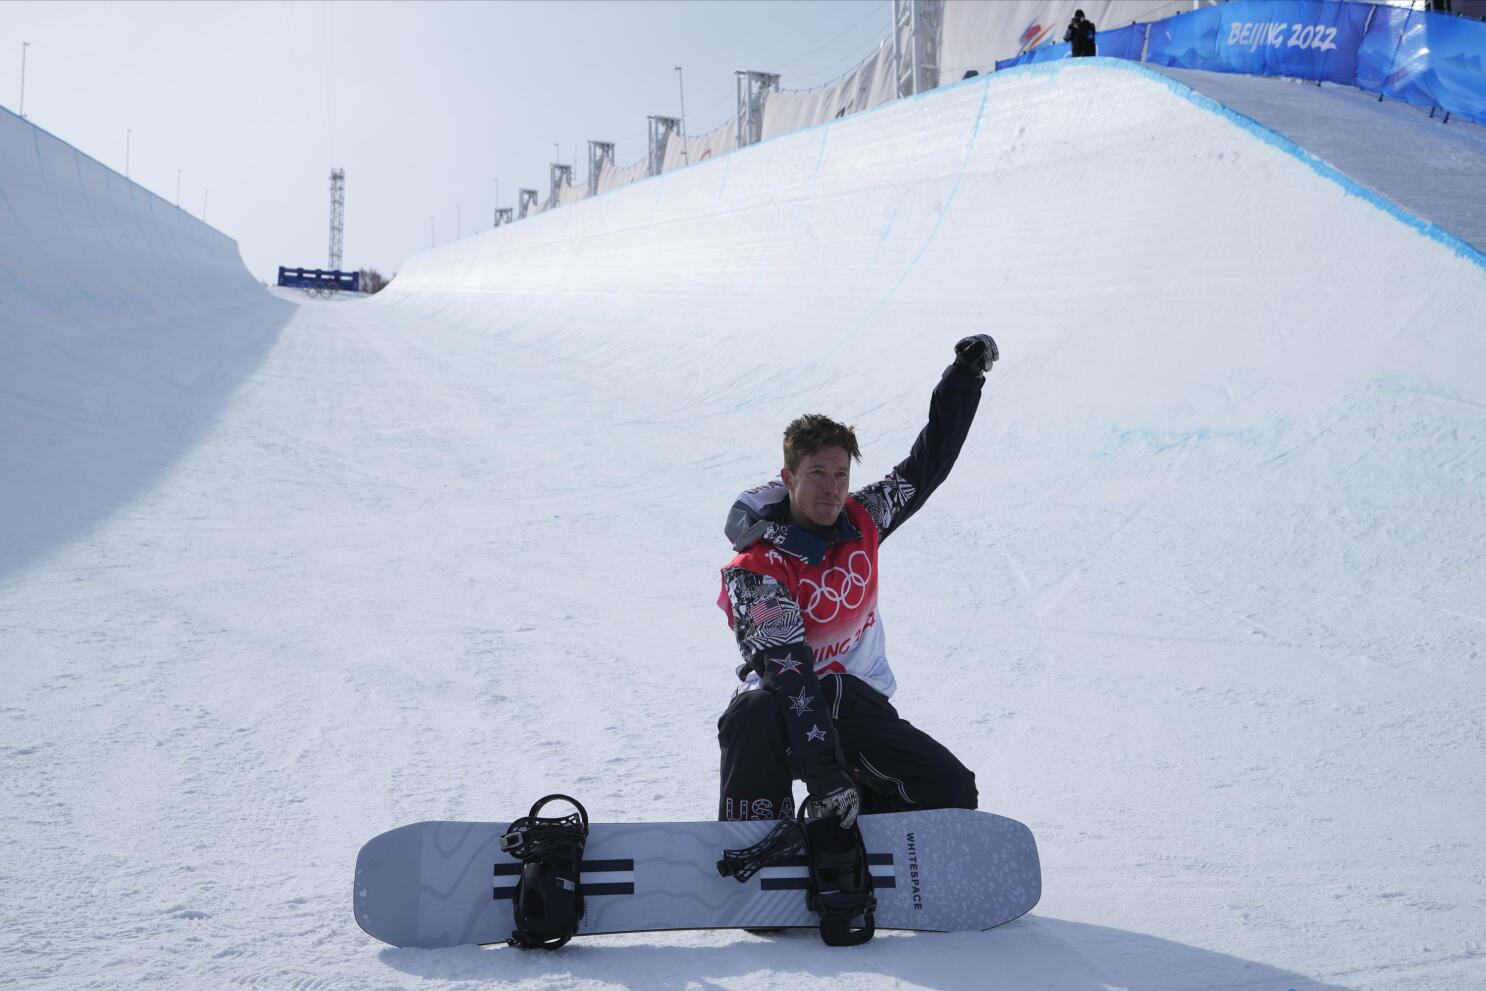 Shaun White - Olympian, Snowboarder, Skateboarder, Actor